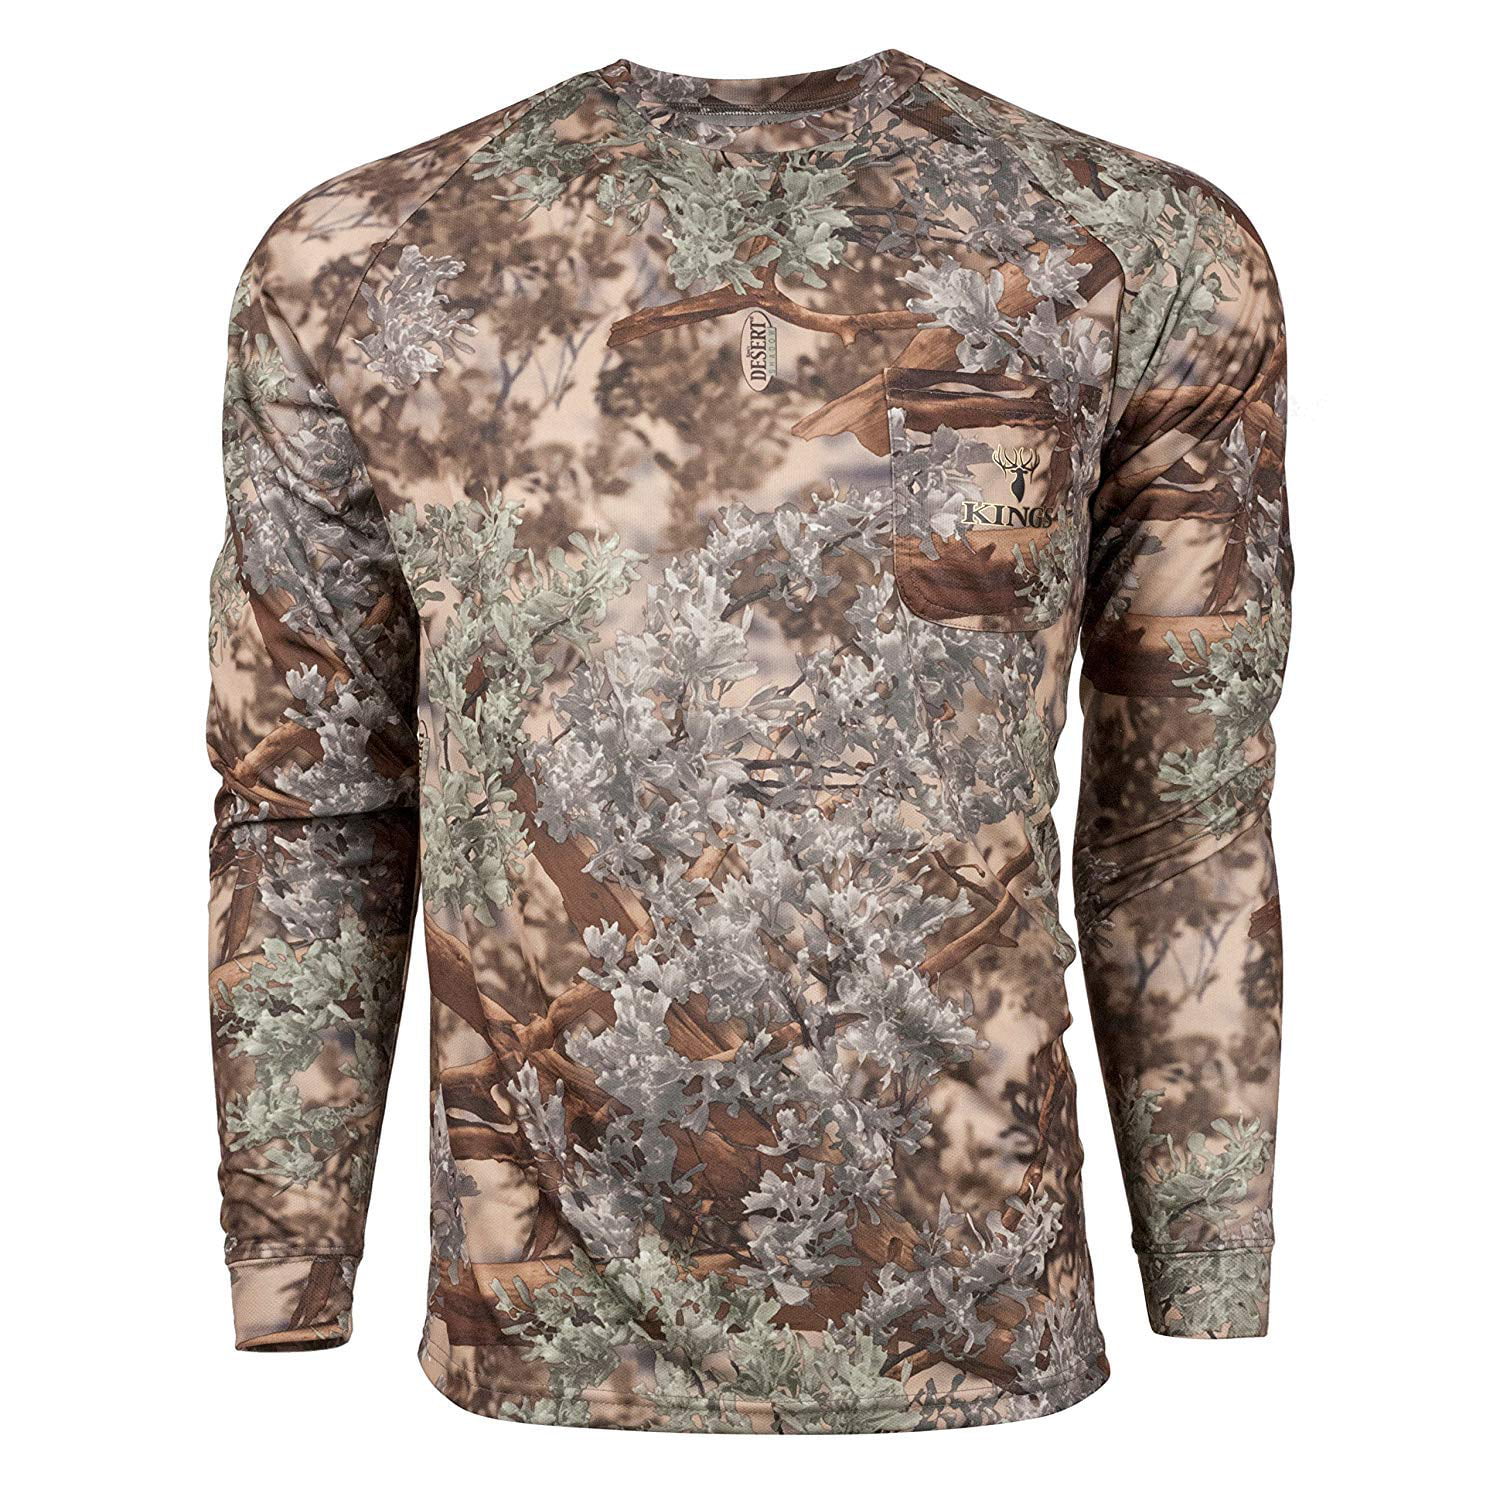 King's Camo Desert Shadow Classic Cotton Long Sleeve Hunting Shirt 4XLarge 